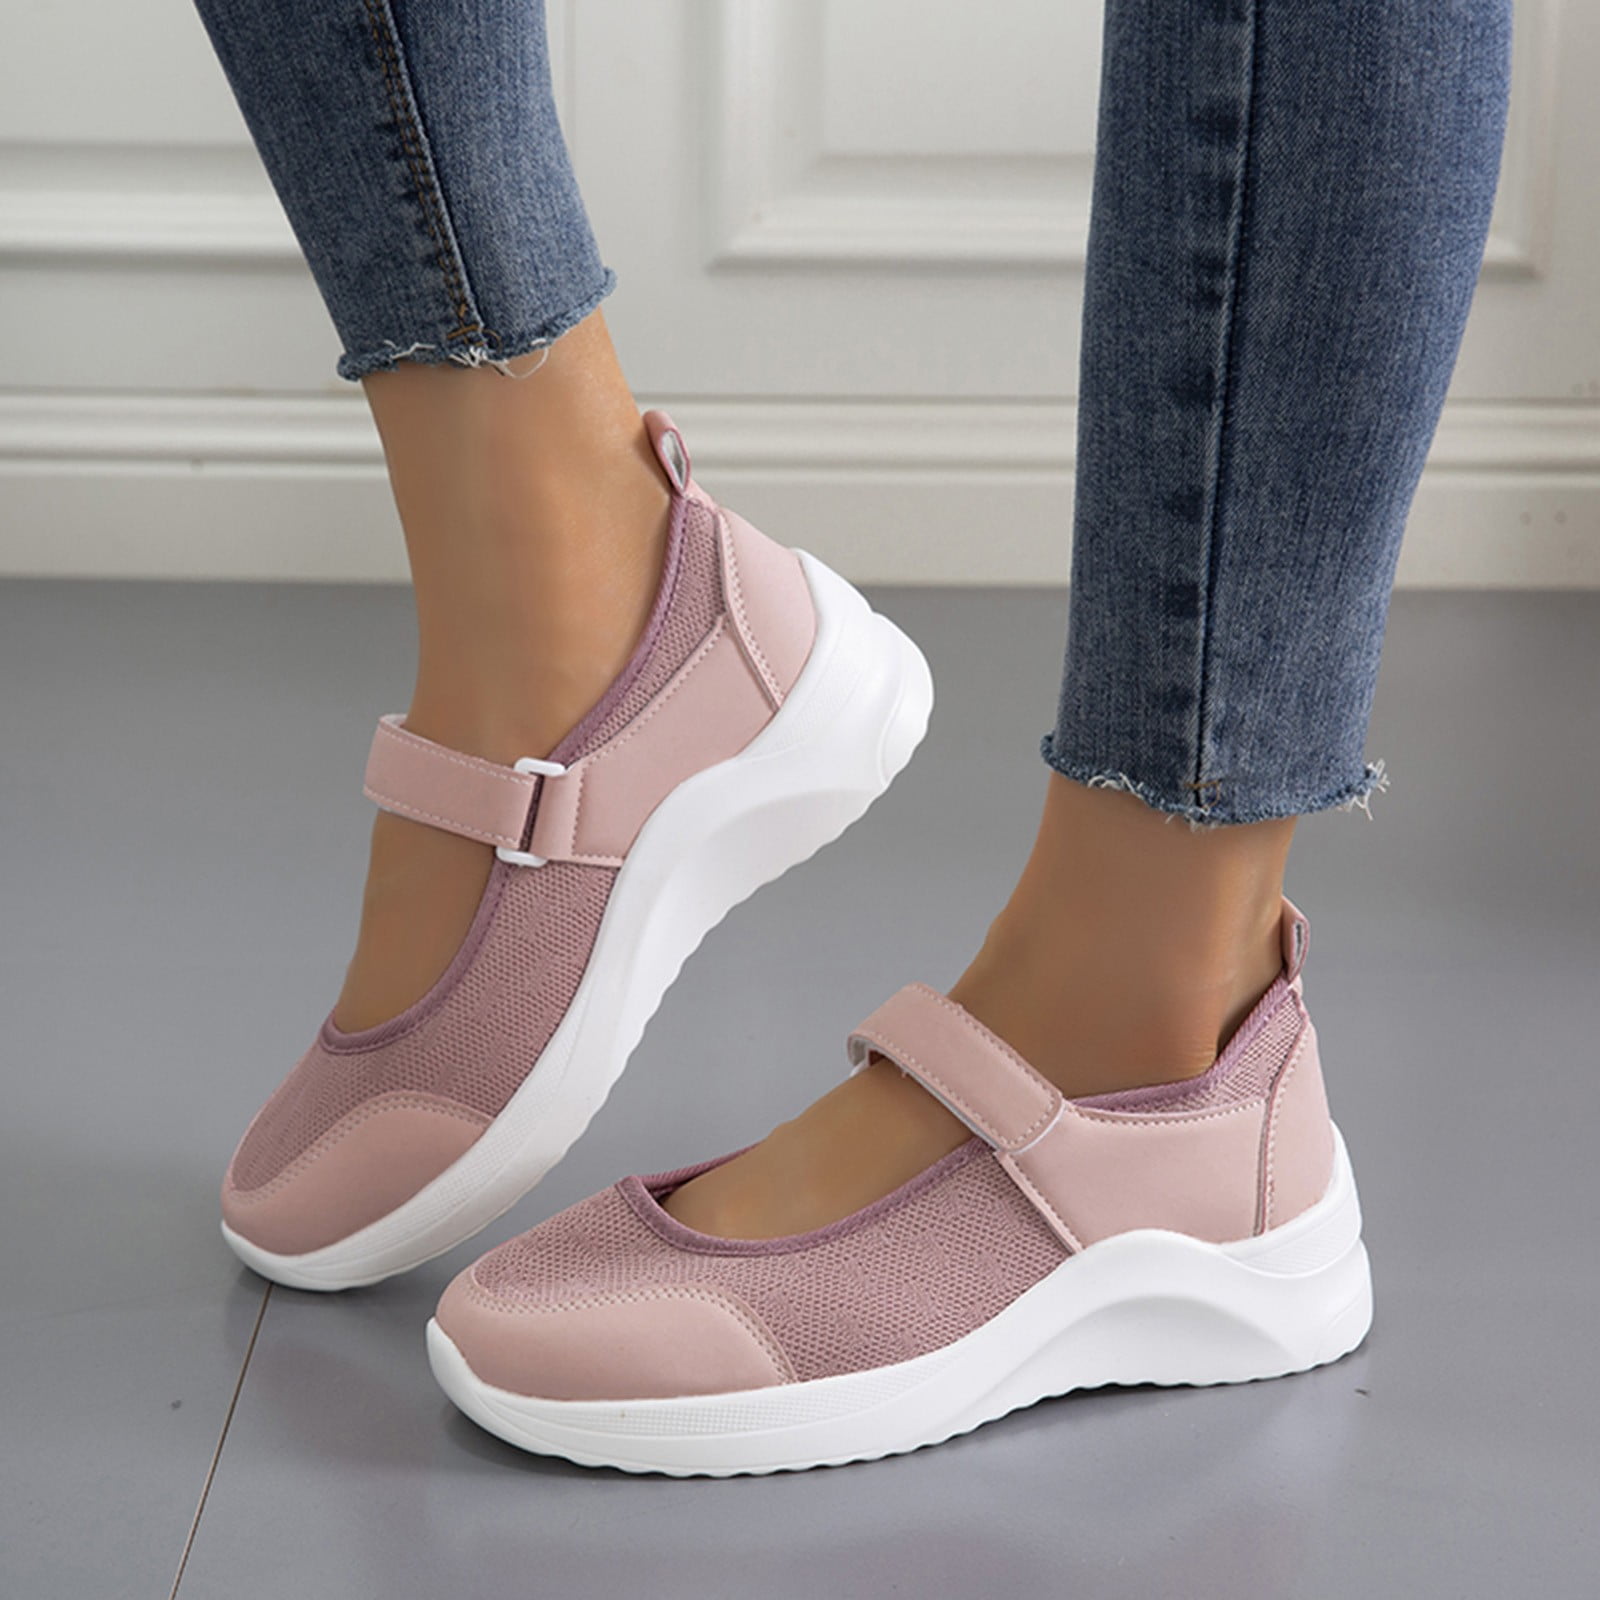 Women Wedge High Heel Slip On Leisure Loafers Platform Creeper Fashion Shoes Hot 